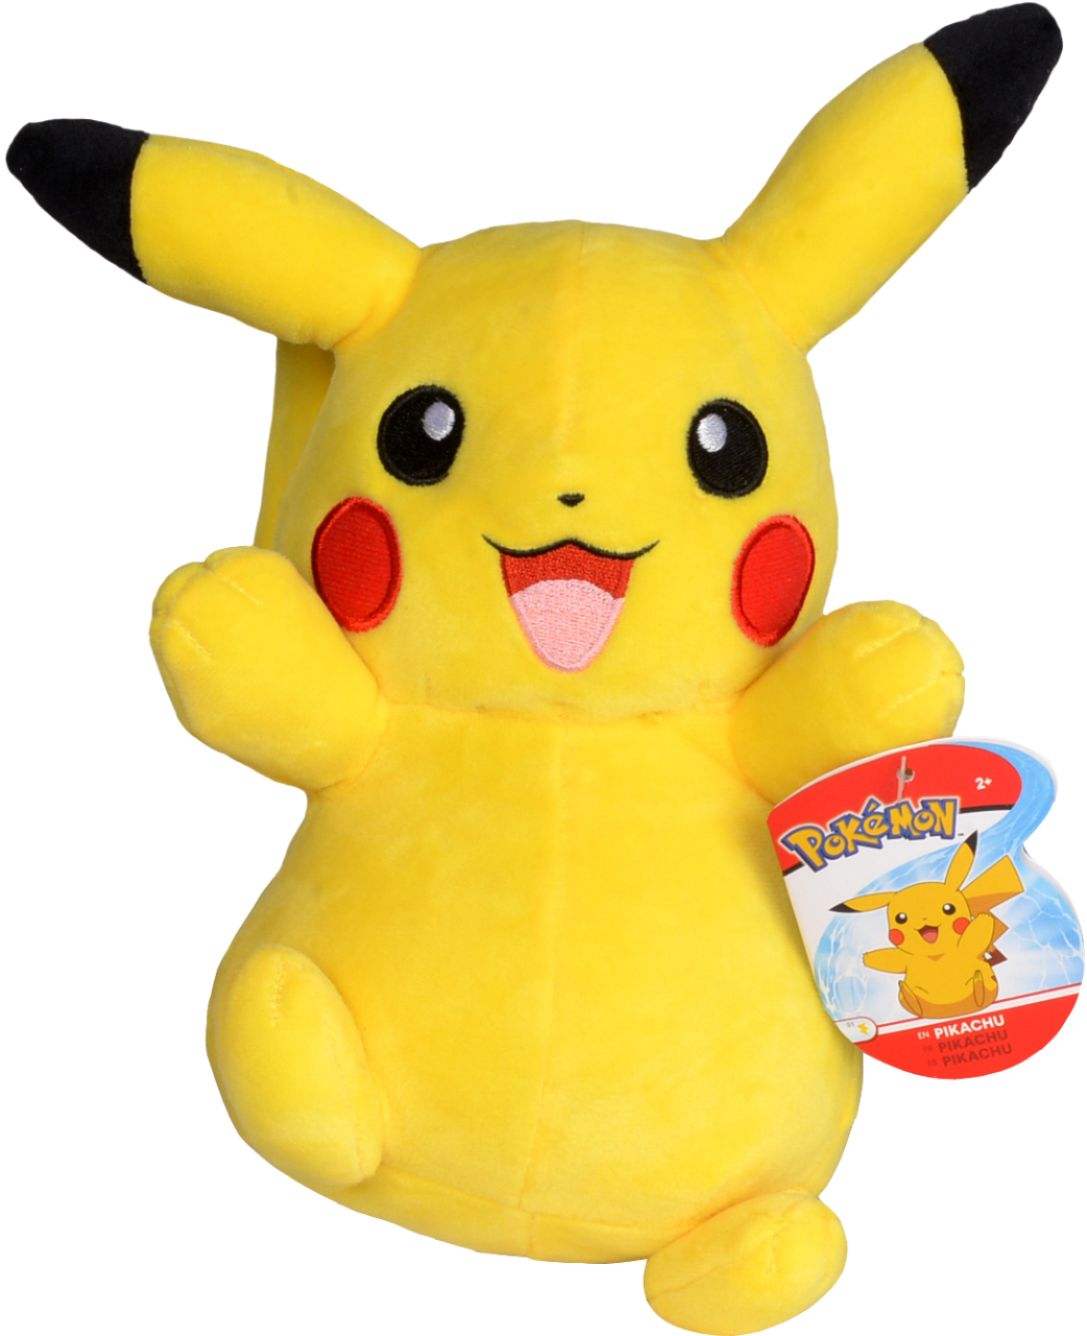 Best Pokémon plush